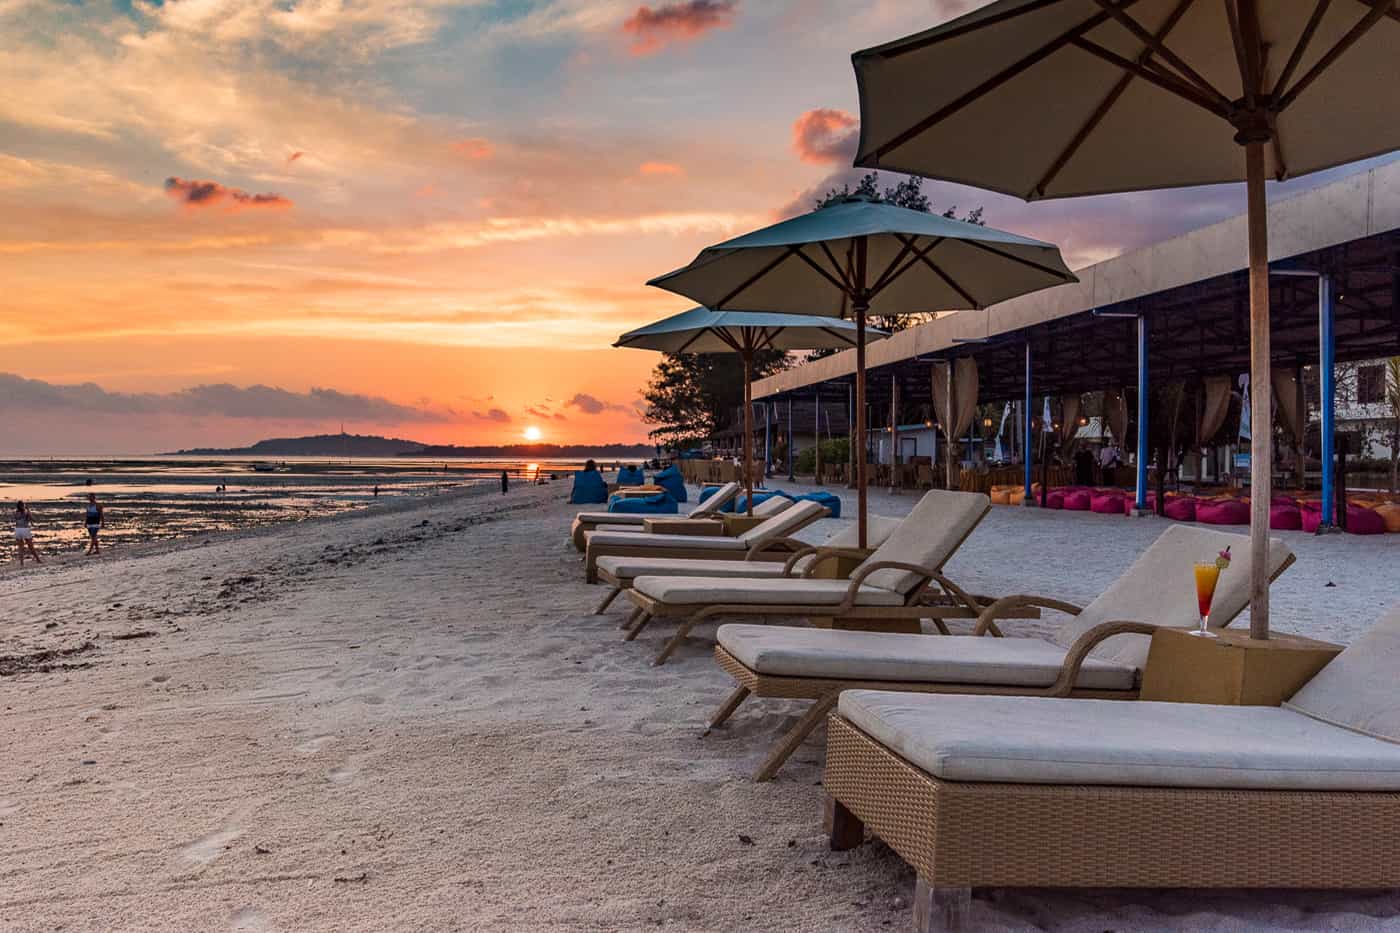 Beach sunrise in the Gili Islands of Lombok Indonesia